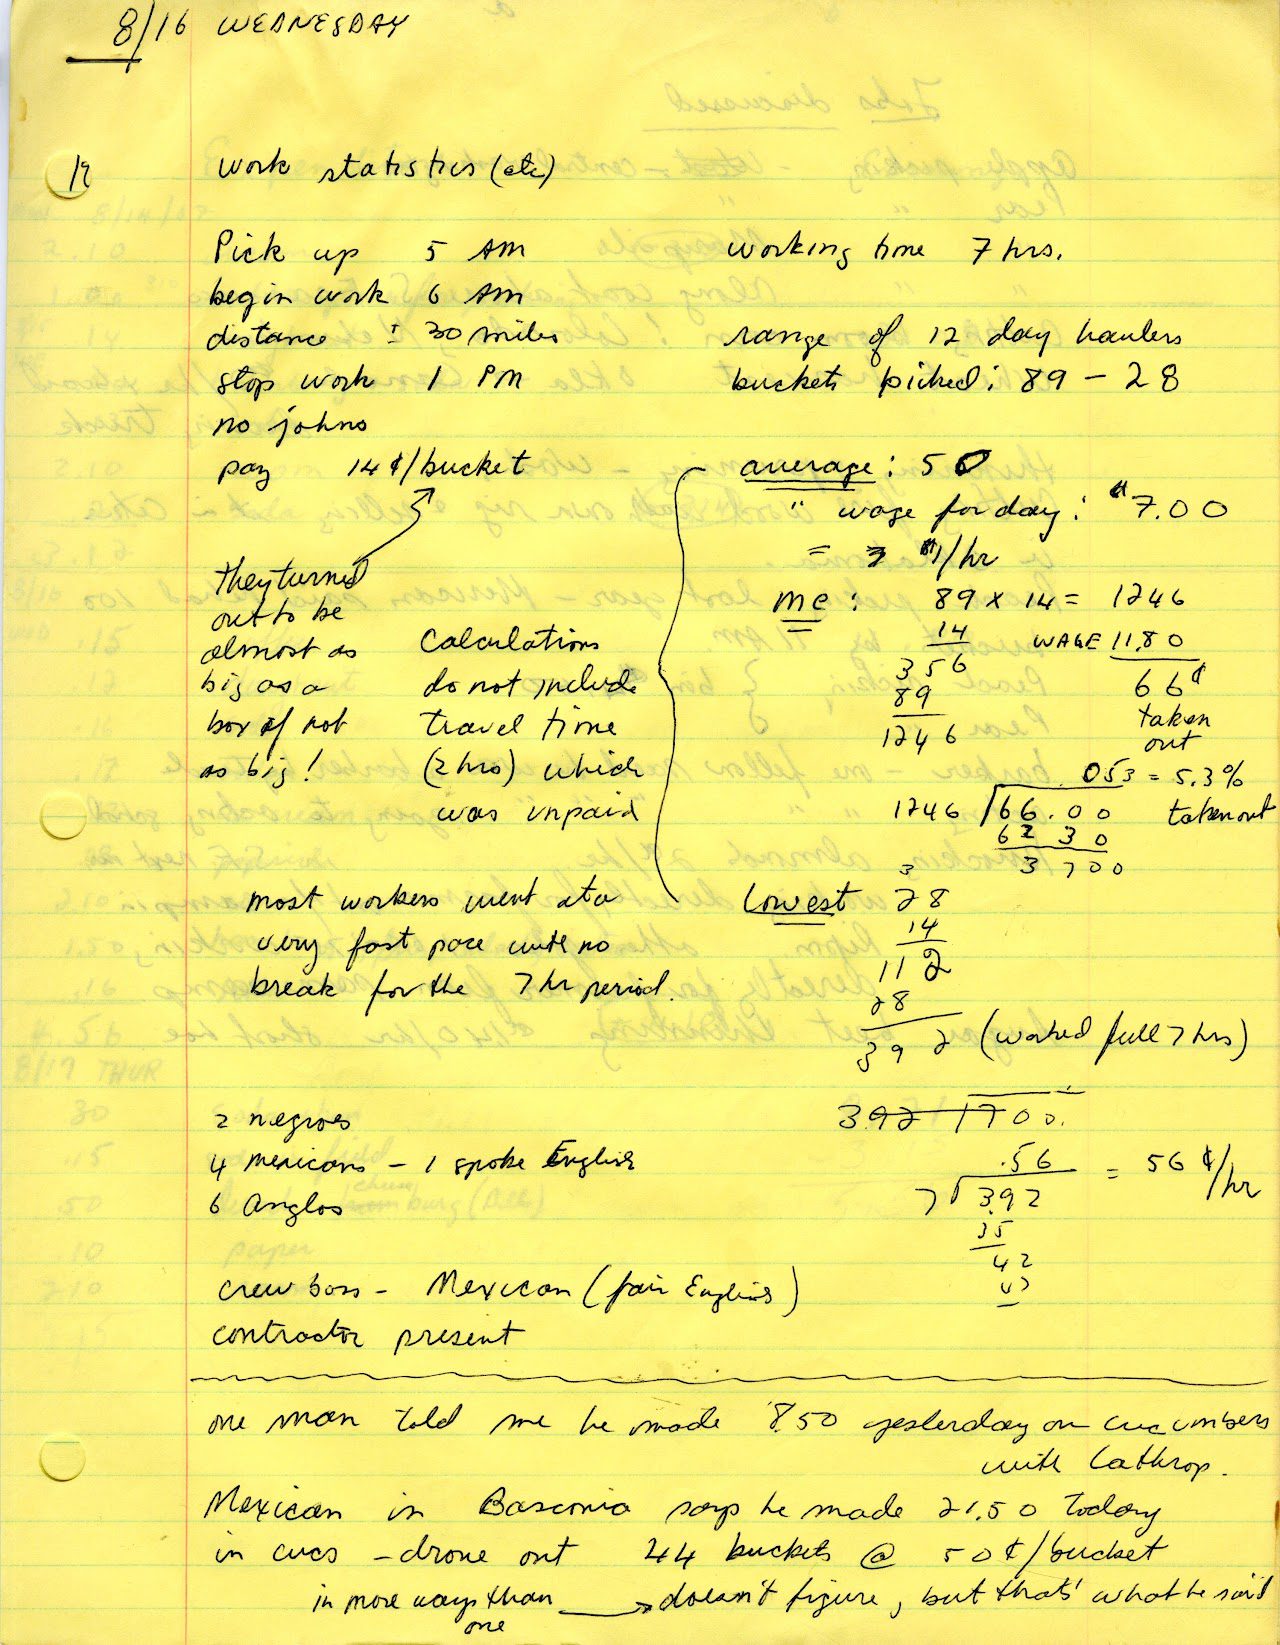 Handwritten notes by Isao Fujimoto recording labor statistics. 